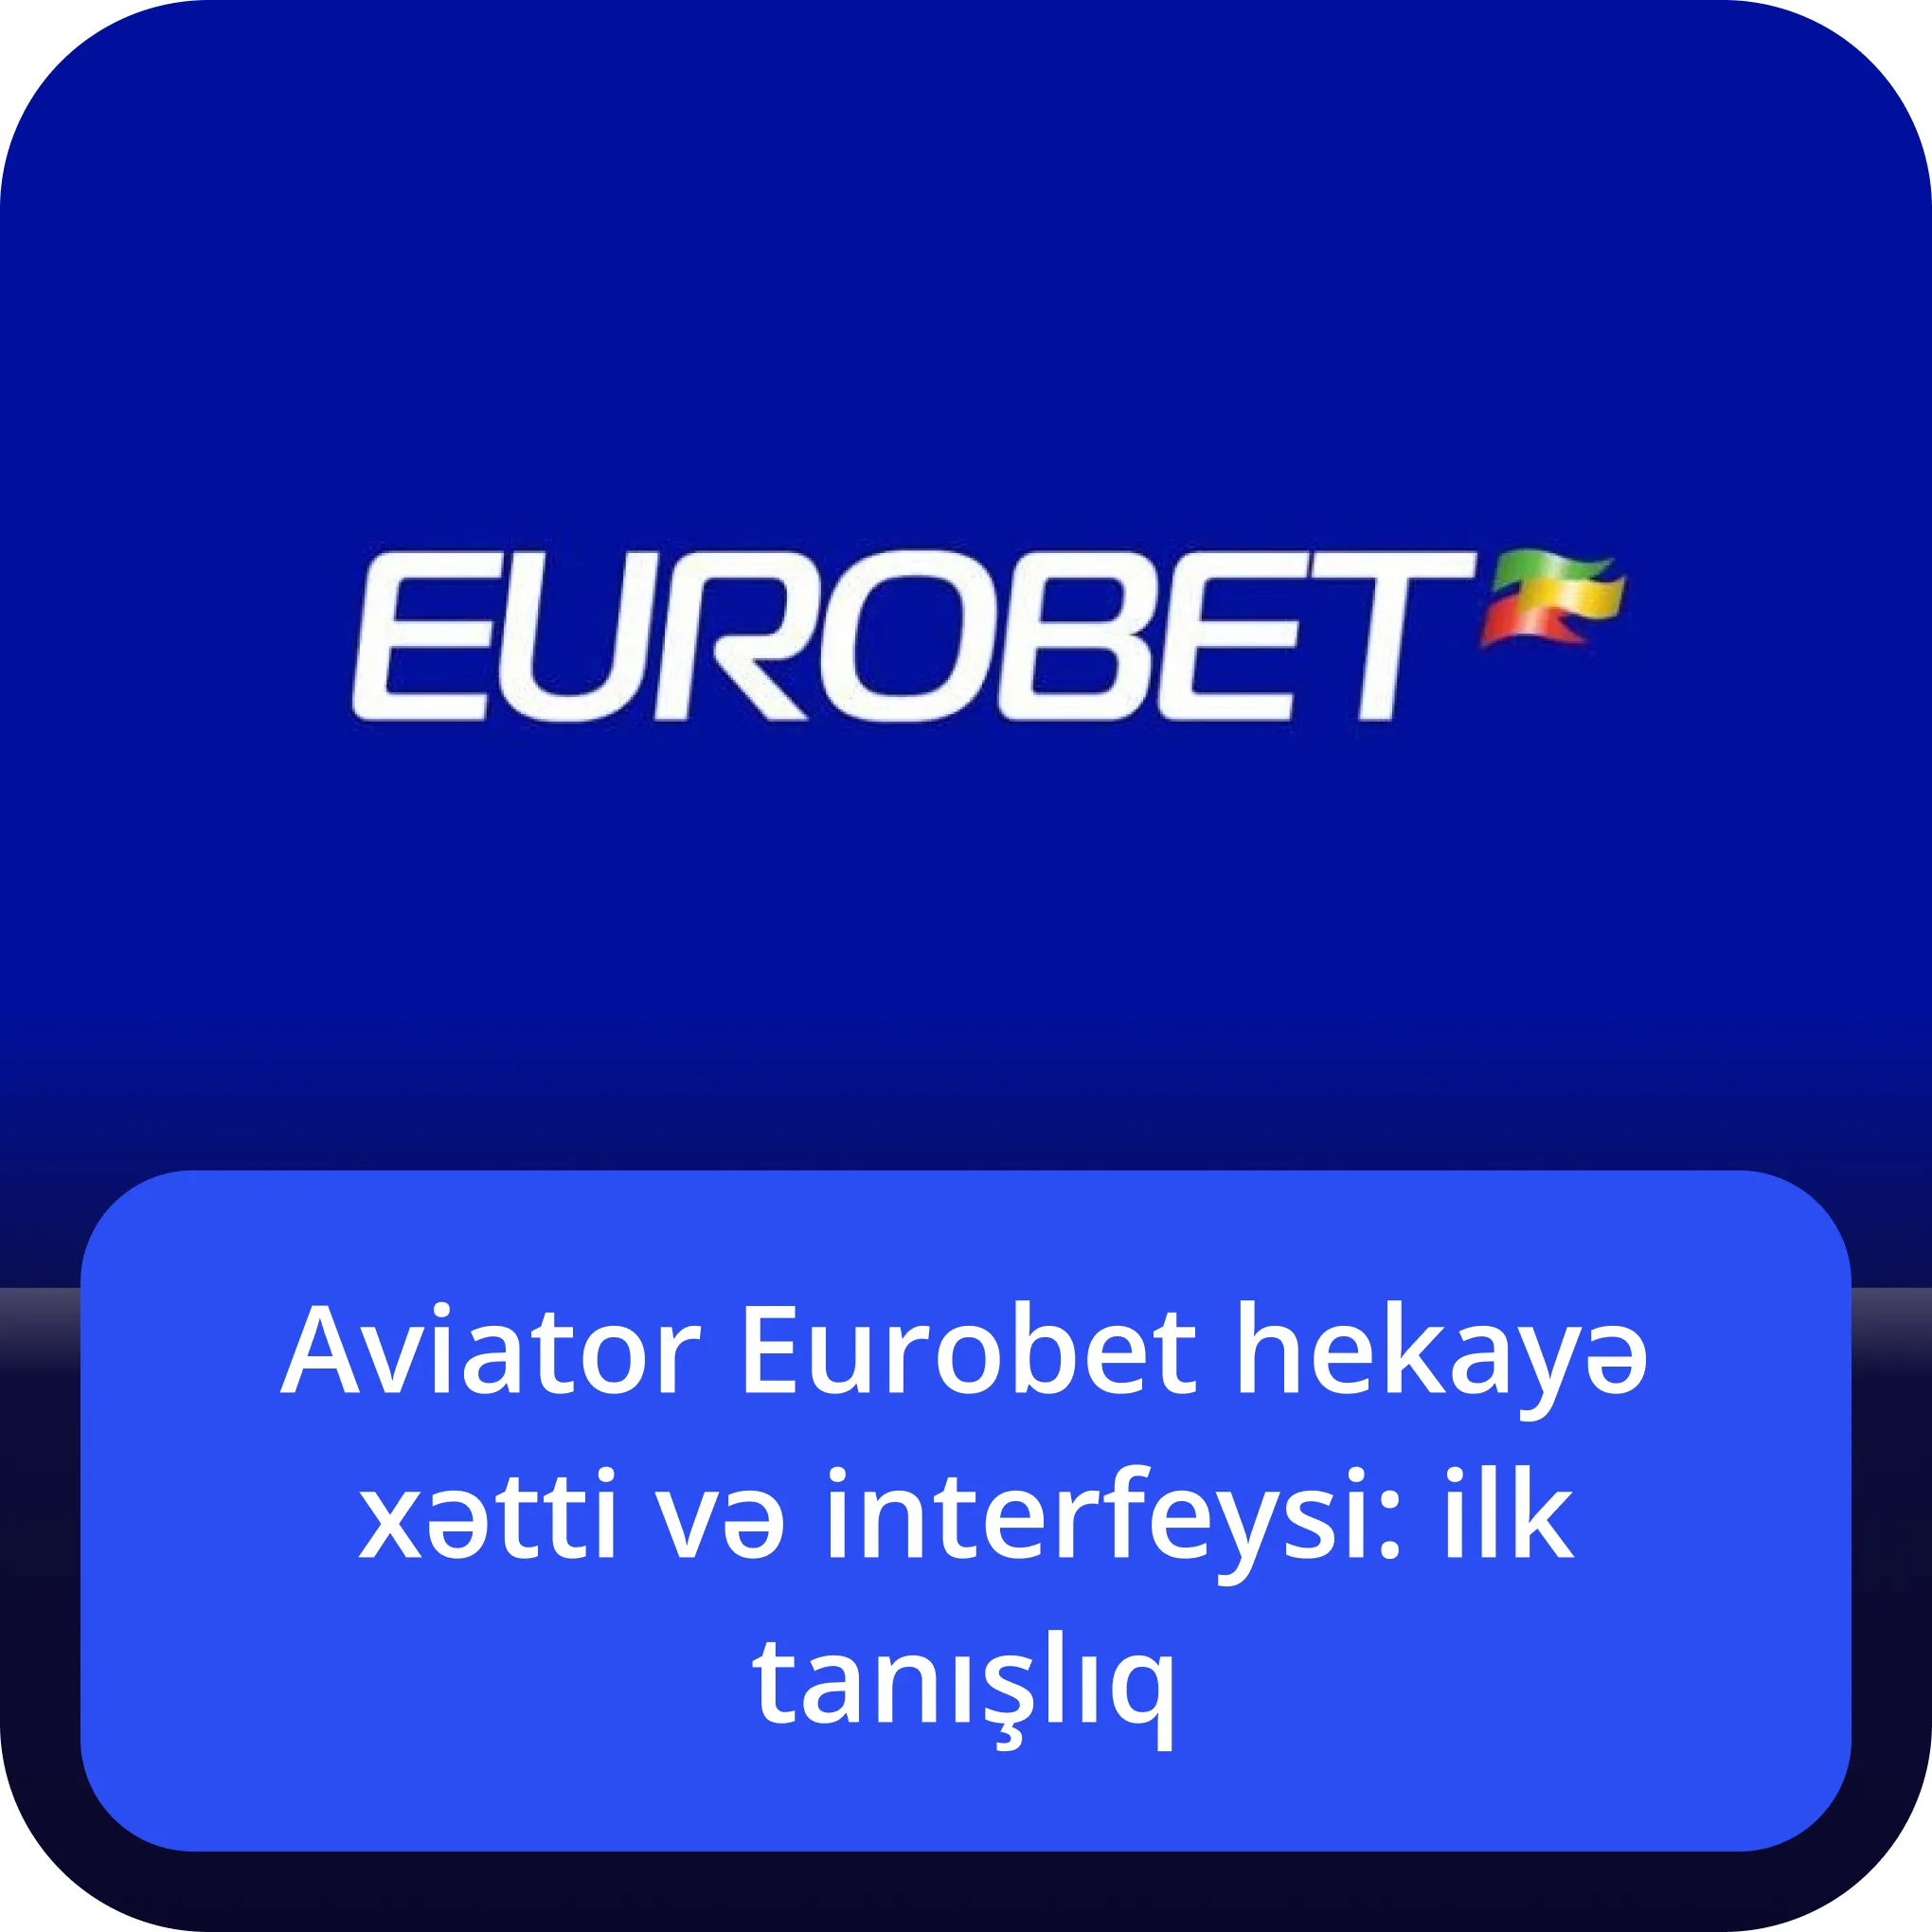 eurobet aviator 